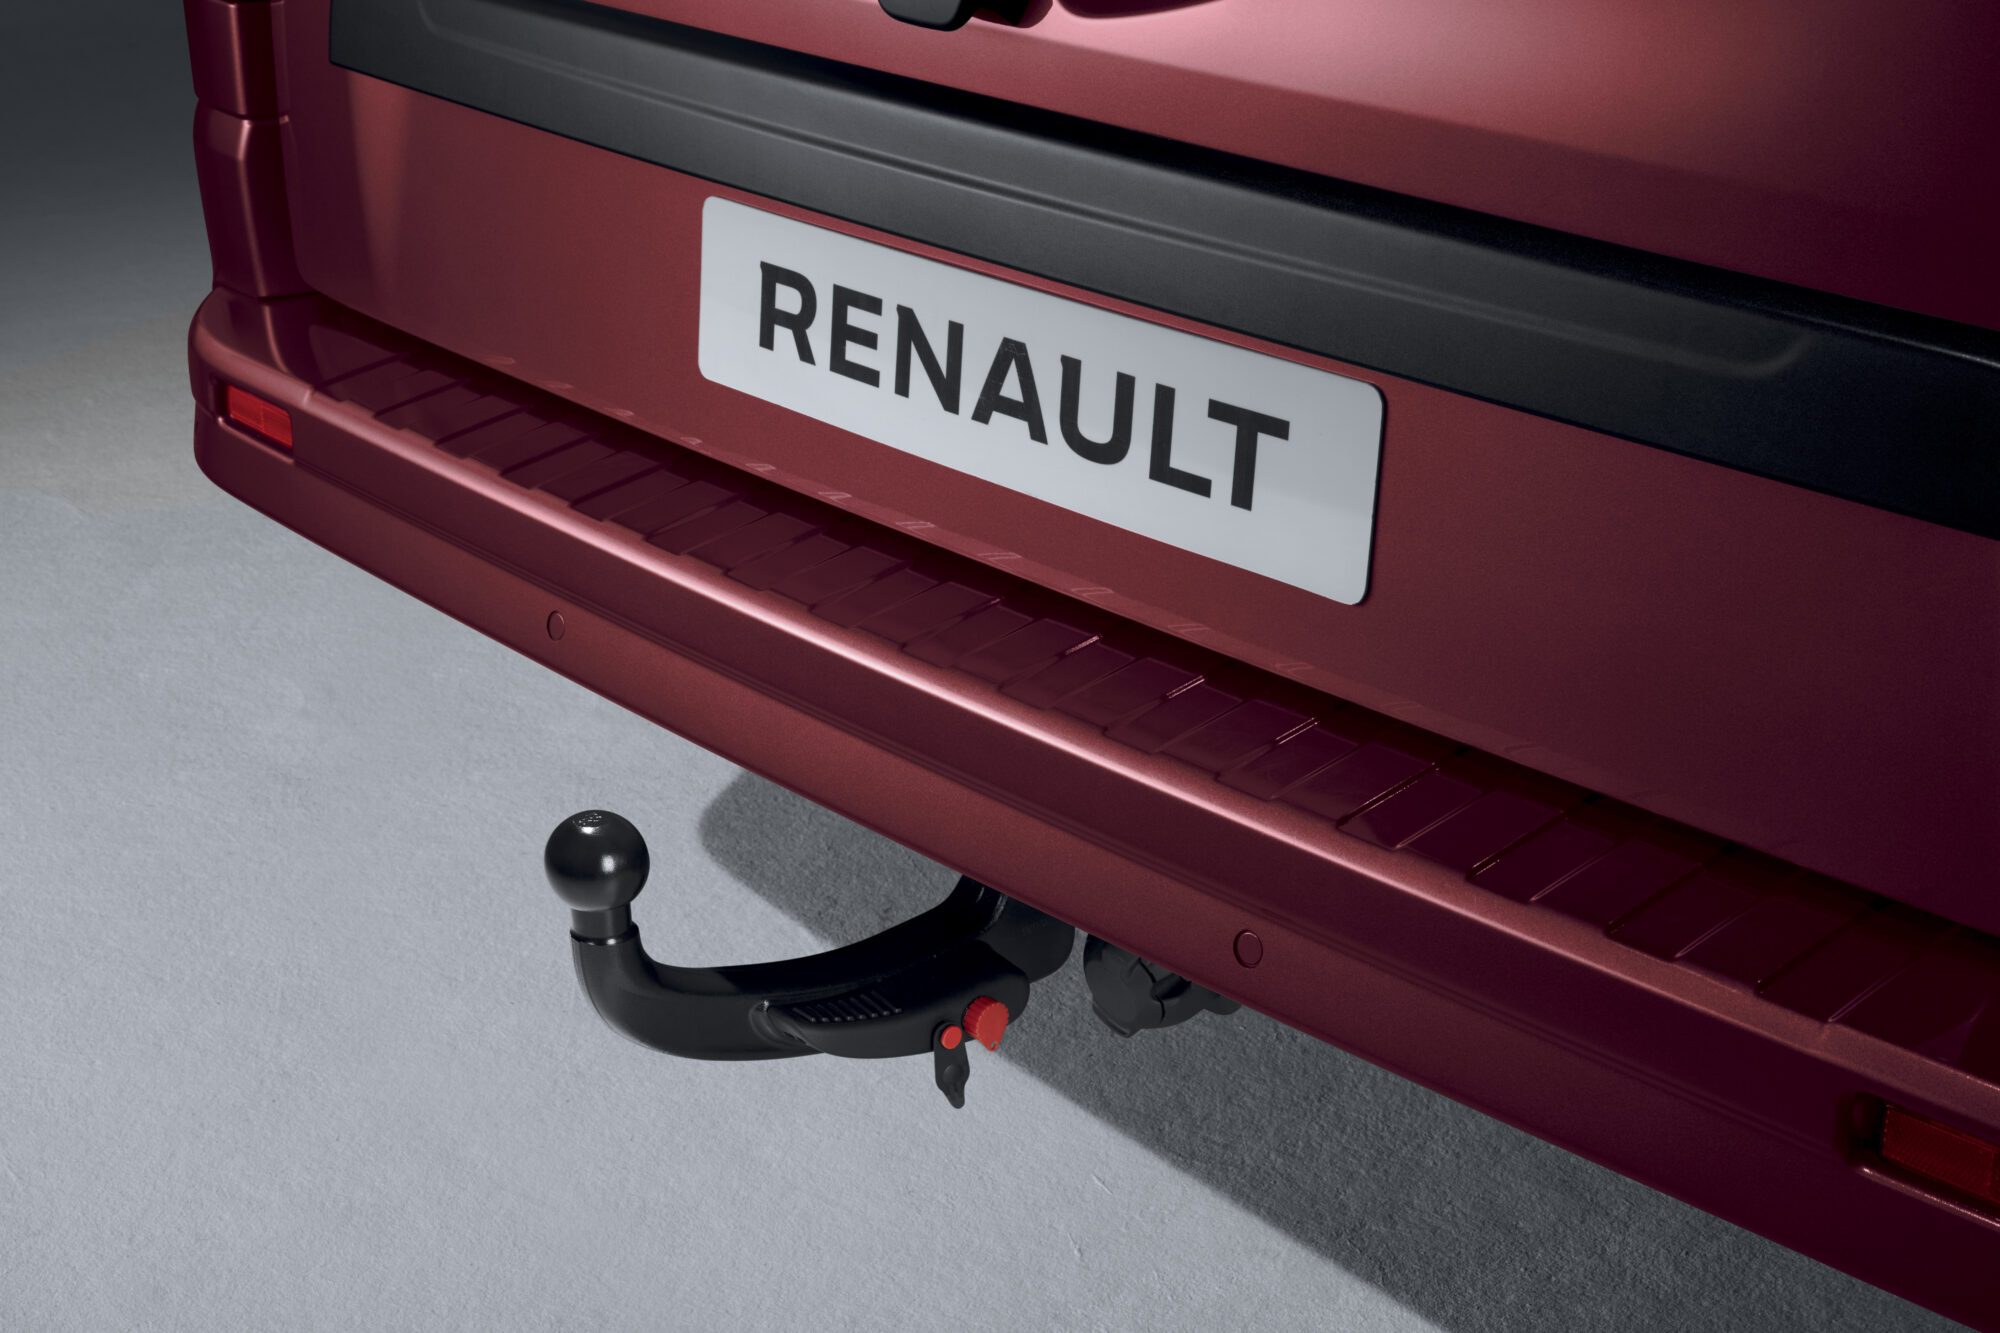 2021 - New Renault Trafic in studio